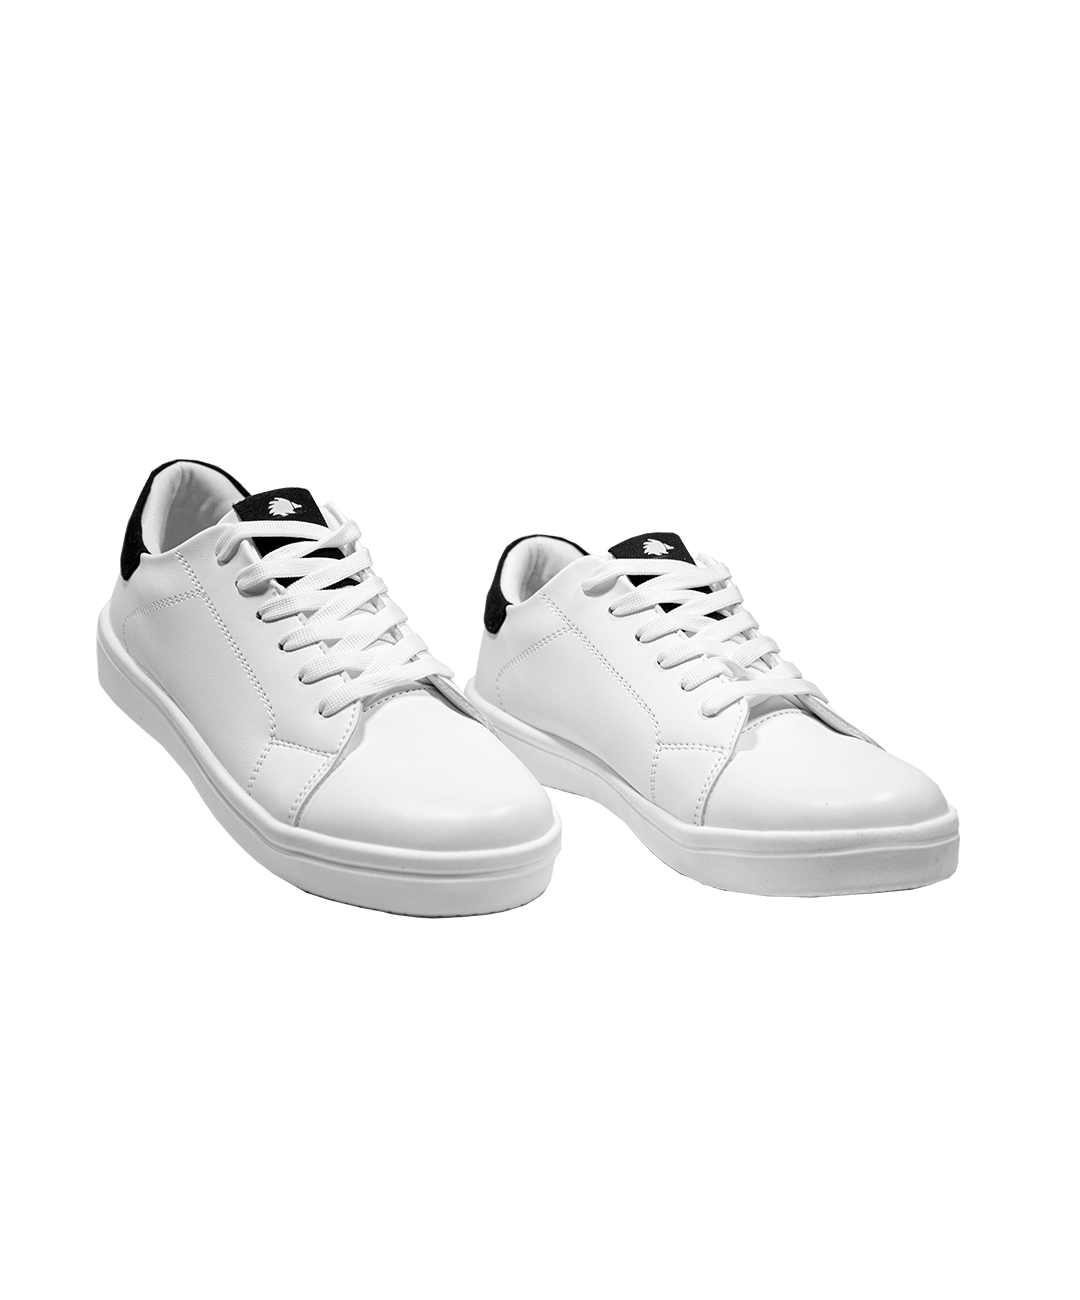 Zapato deportivo Blanco/Negro unisex